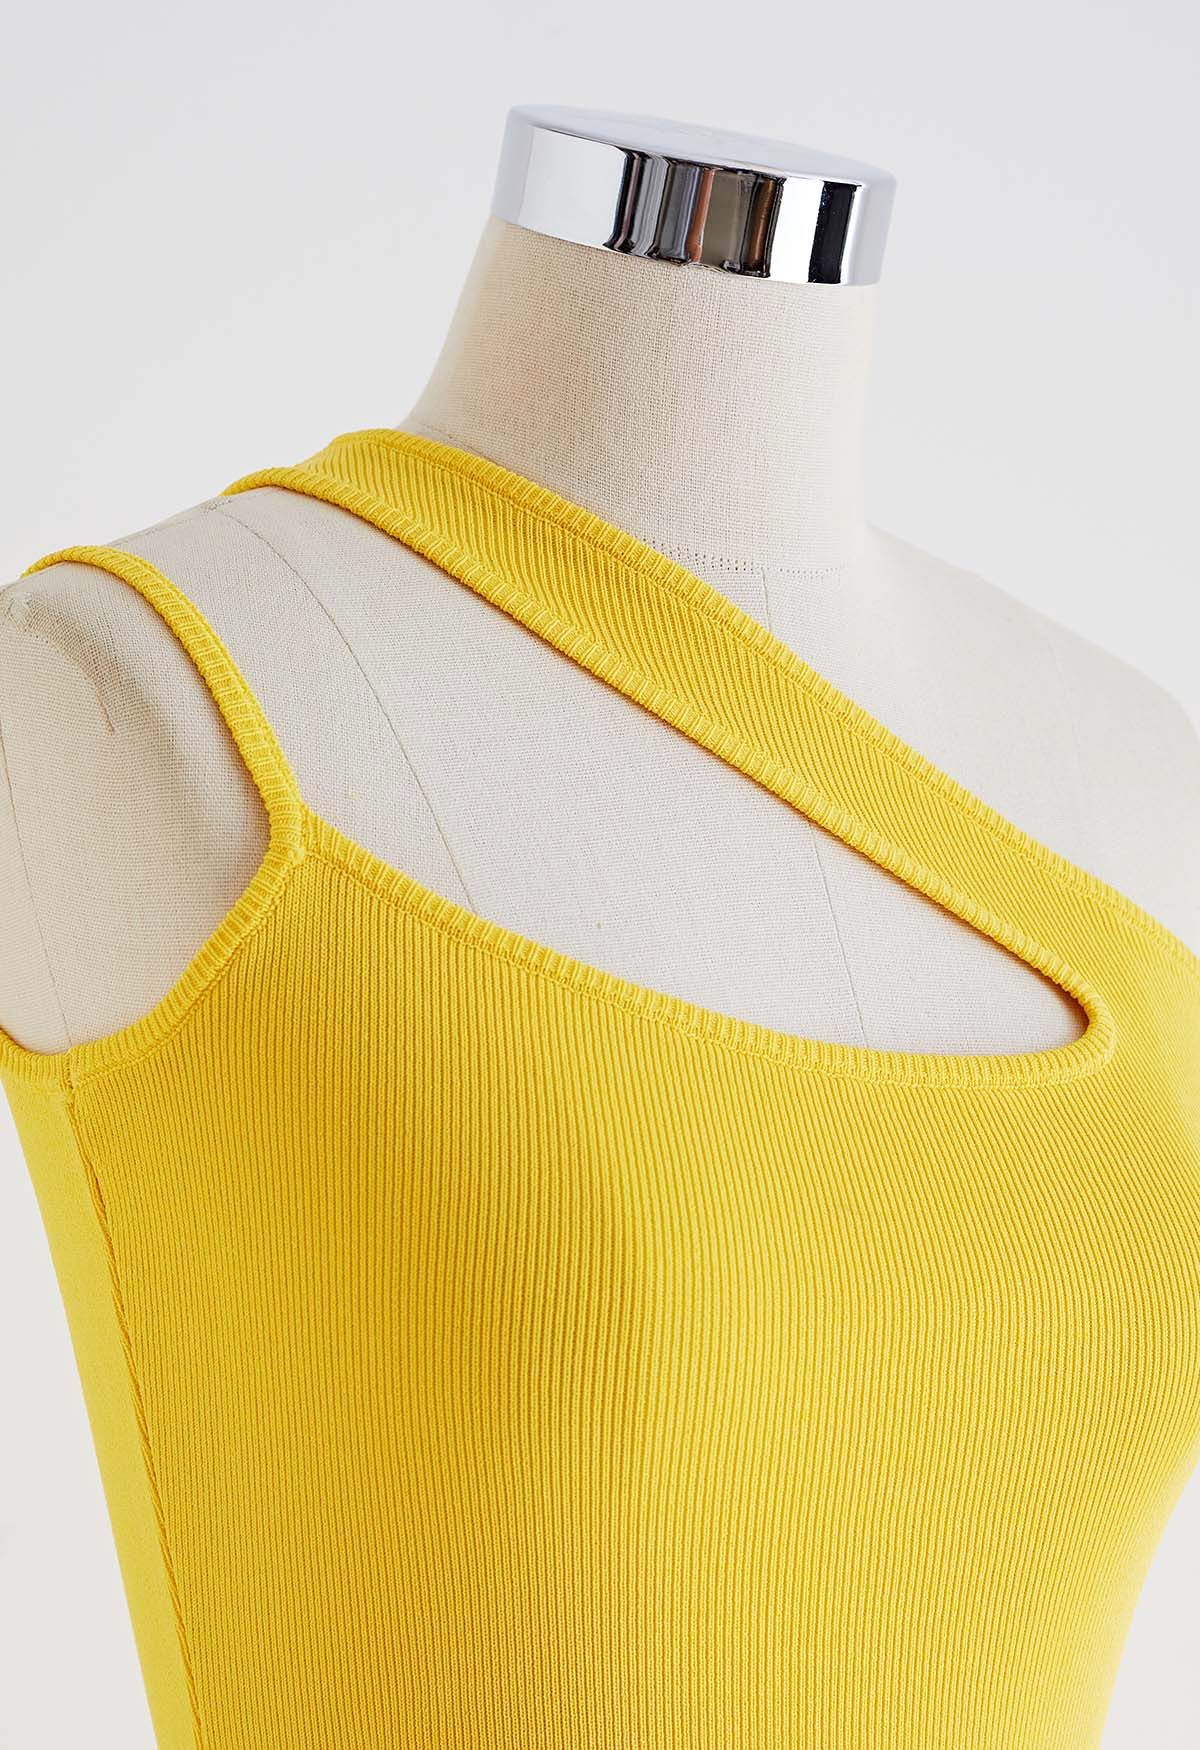 Asymmetric Straps Bodycon Knit Dress in Yellow - Retro, Indie and Unique  Fashion